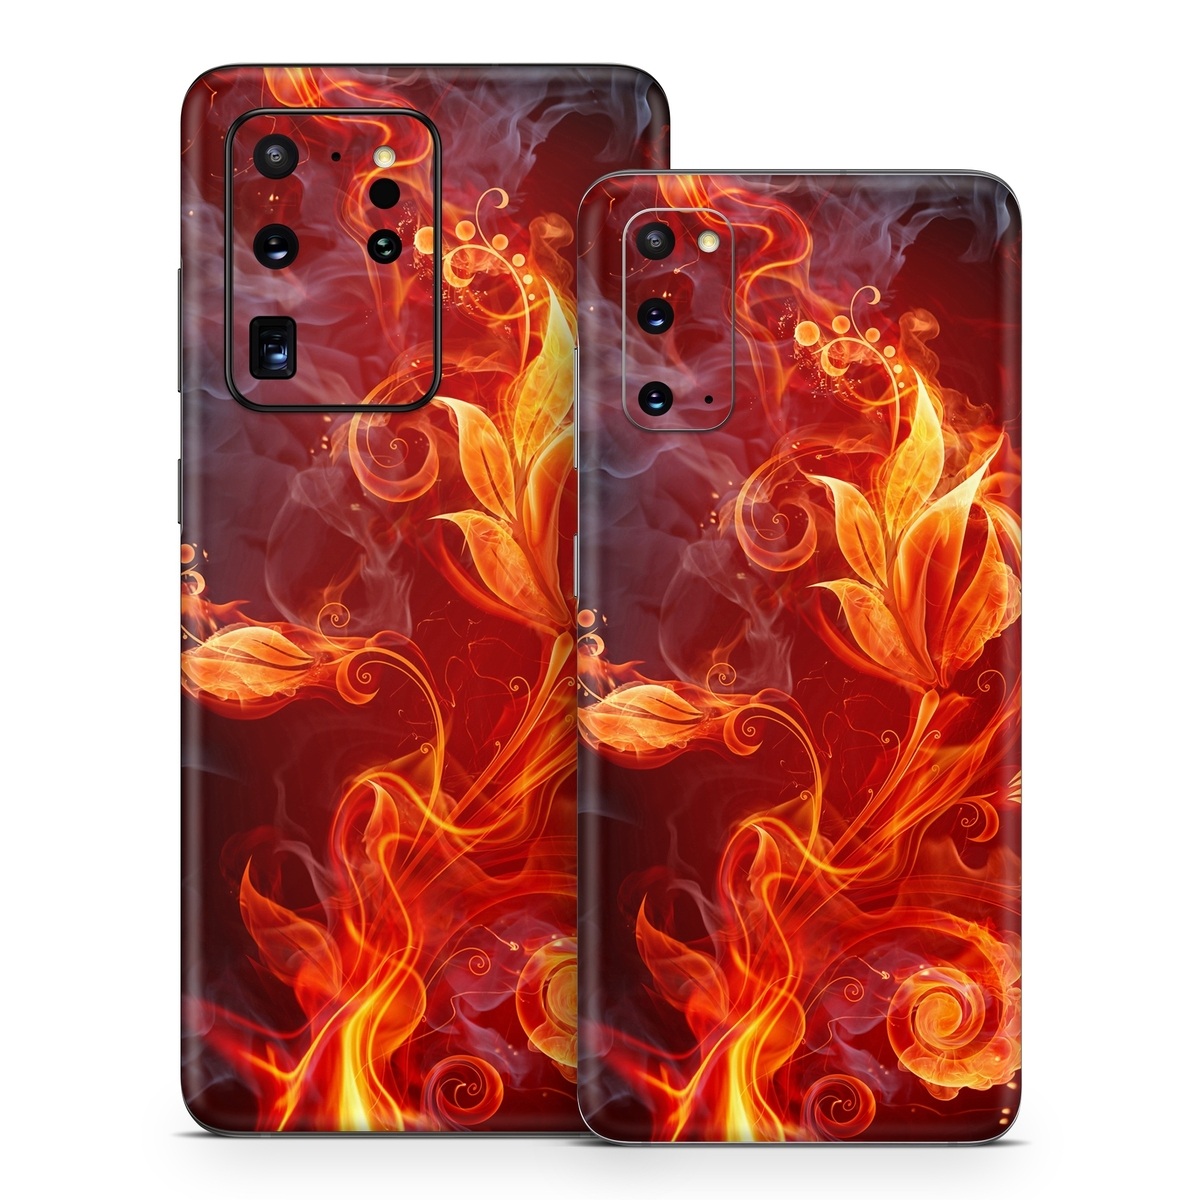 Samsung Galaxy S20 Series Skin design of Flame, Fire, Heat, Red, Orange, Fractal art, Graphic design, Geological phenomenon, Design, Organism, with black, red, orange colors